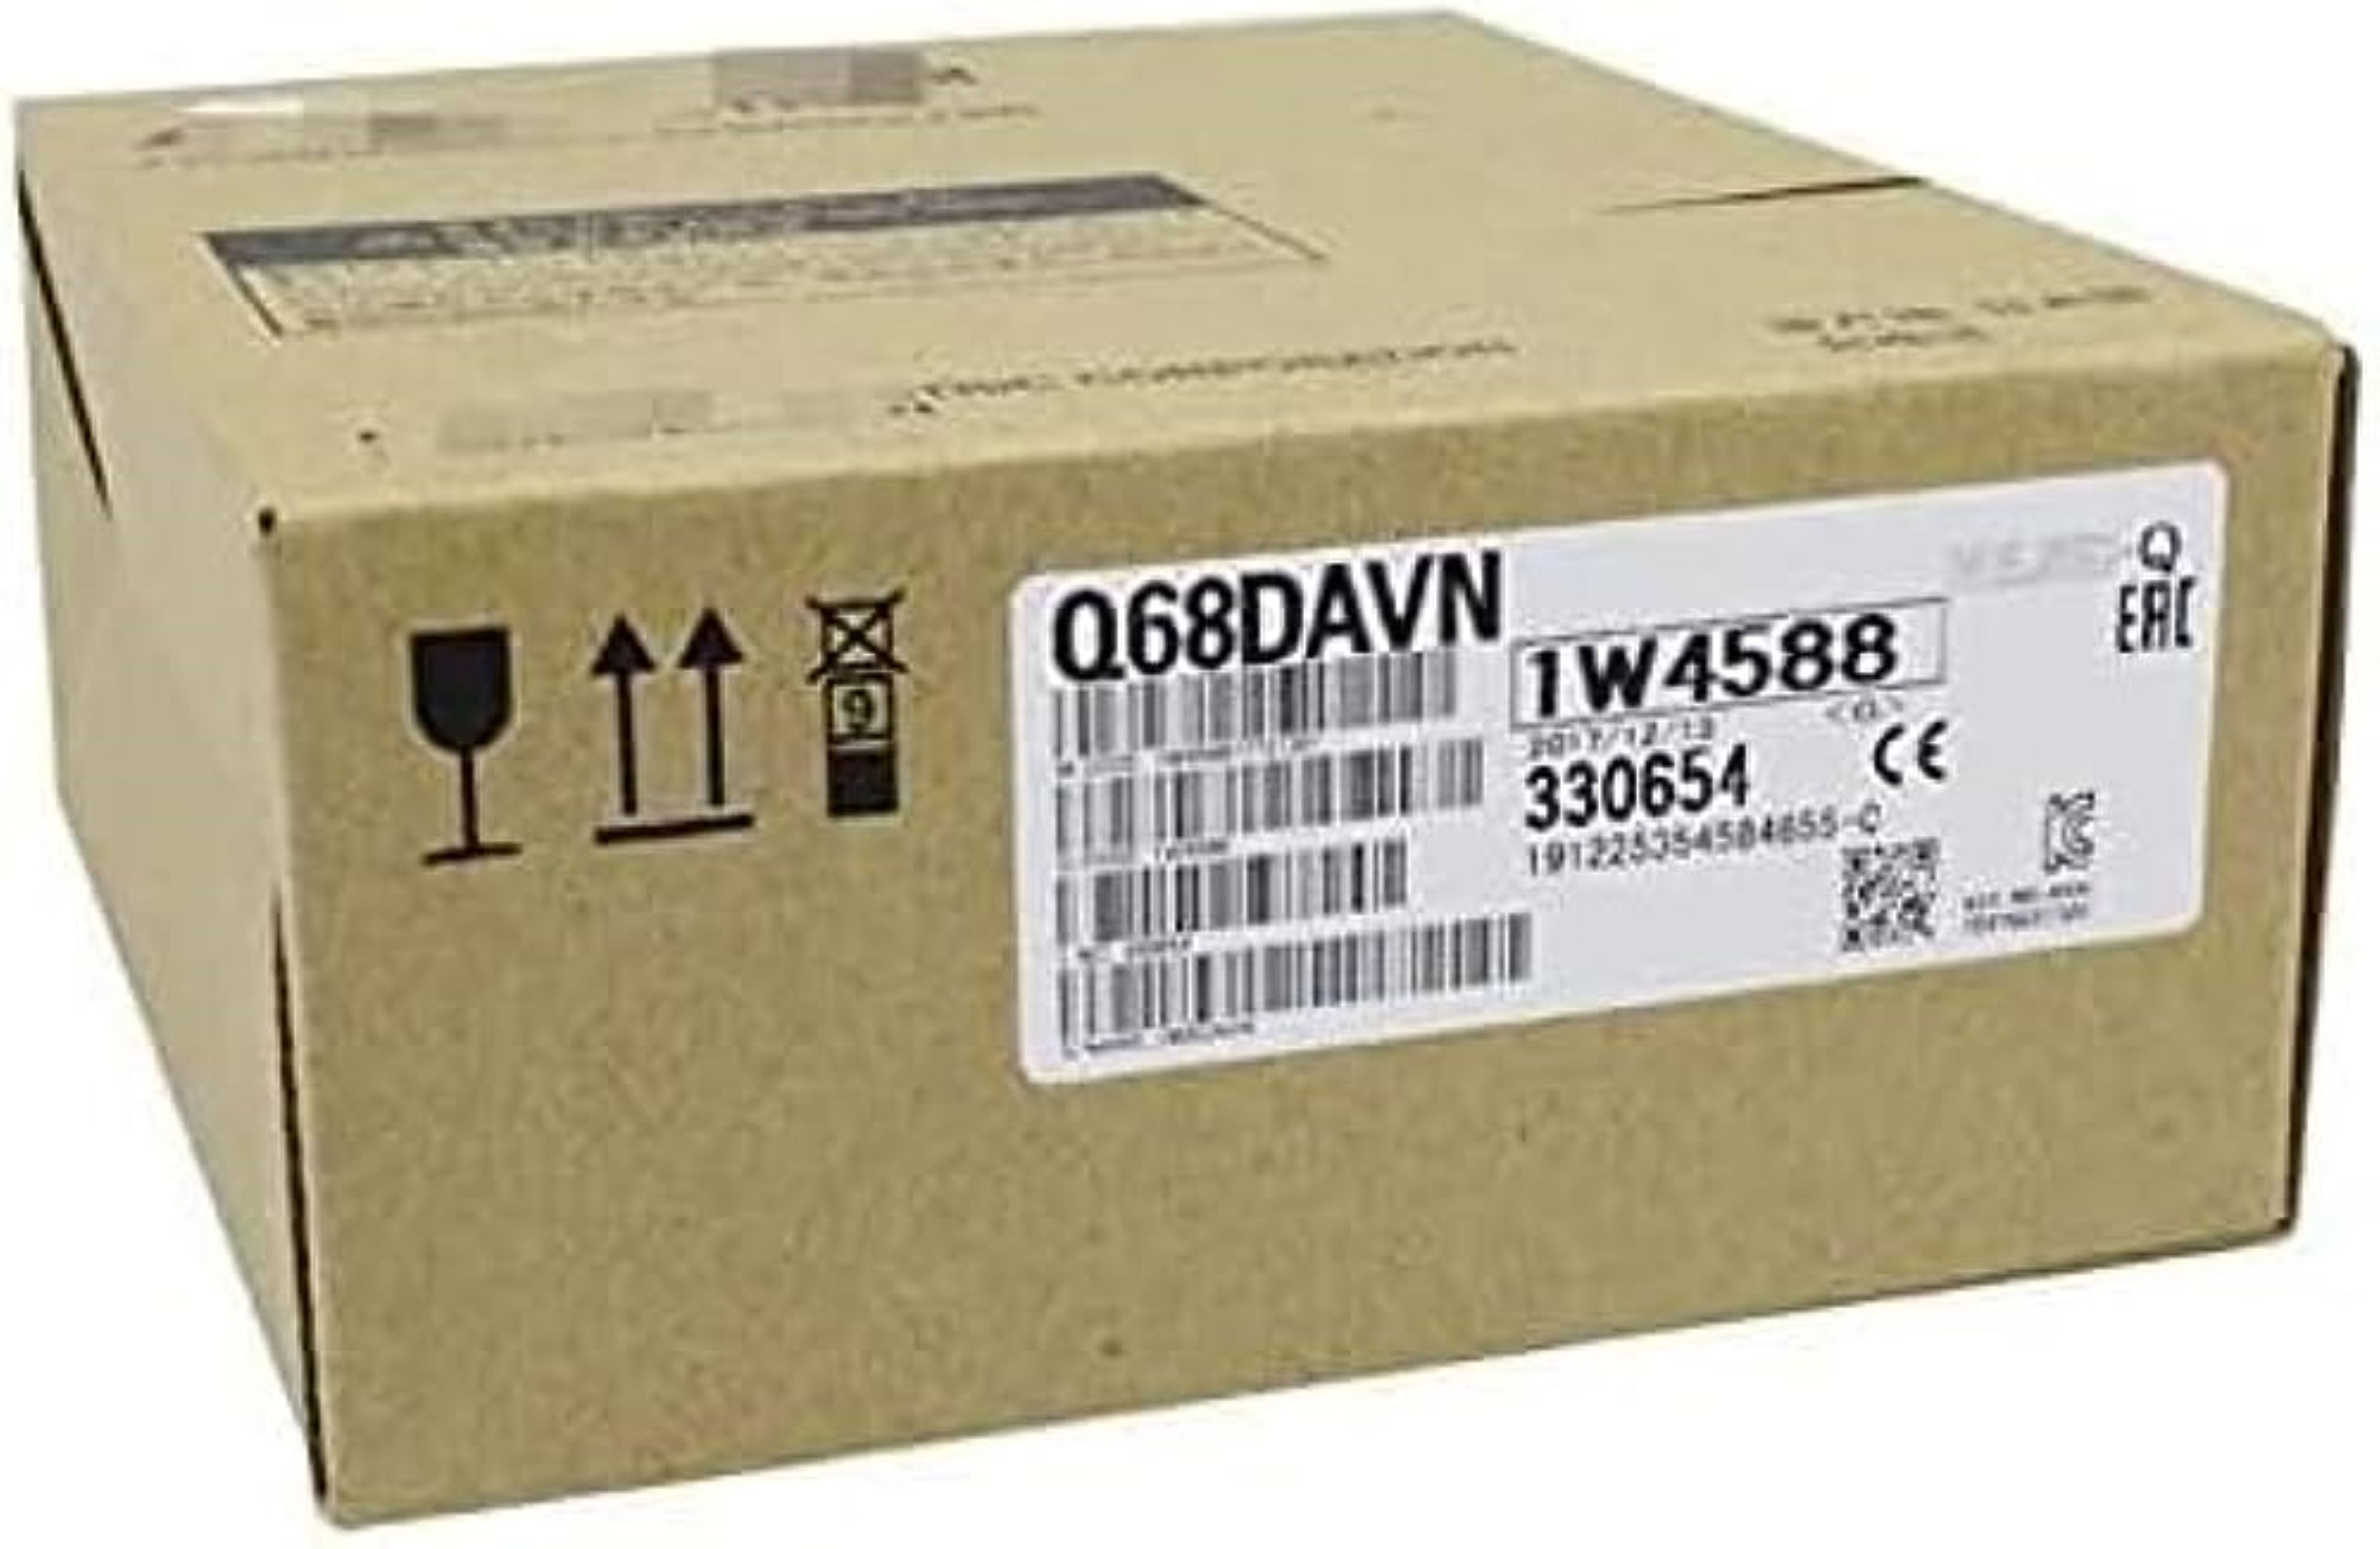 Q68DAVN-mitsubishi programmable logic controller